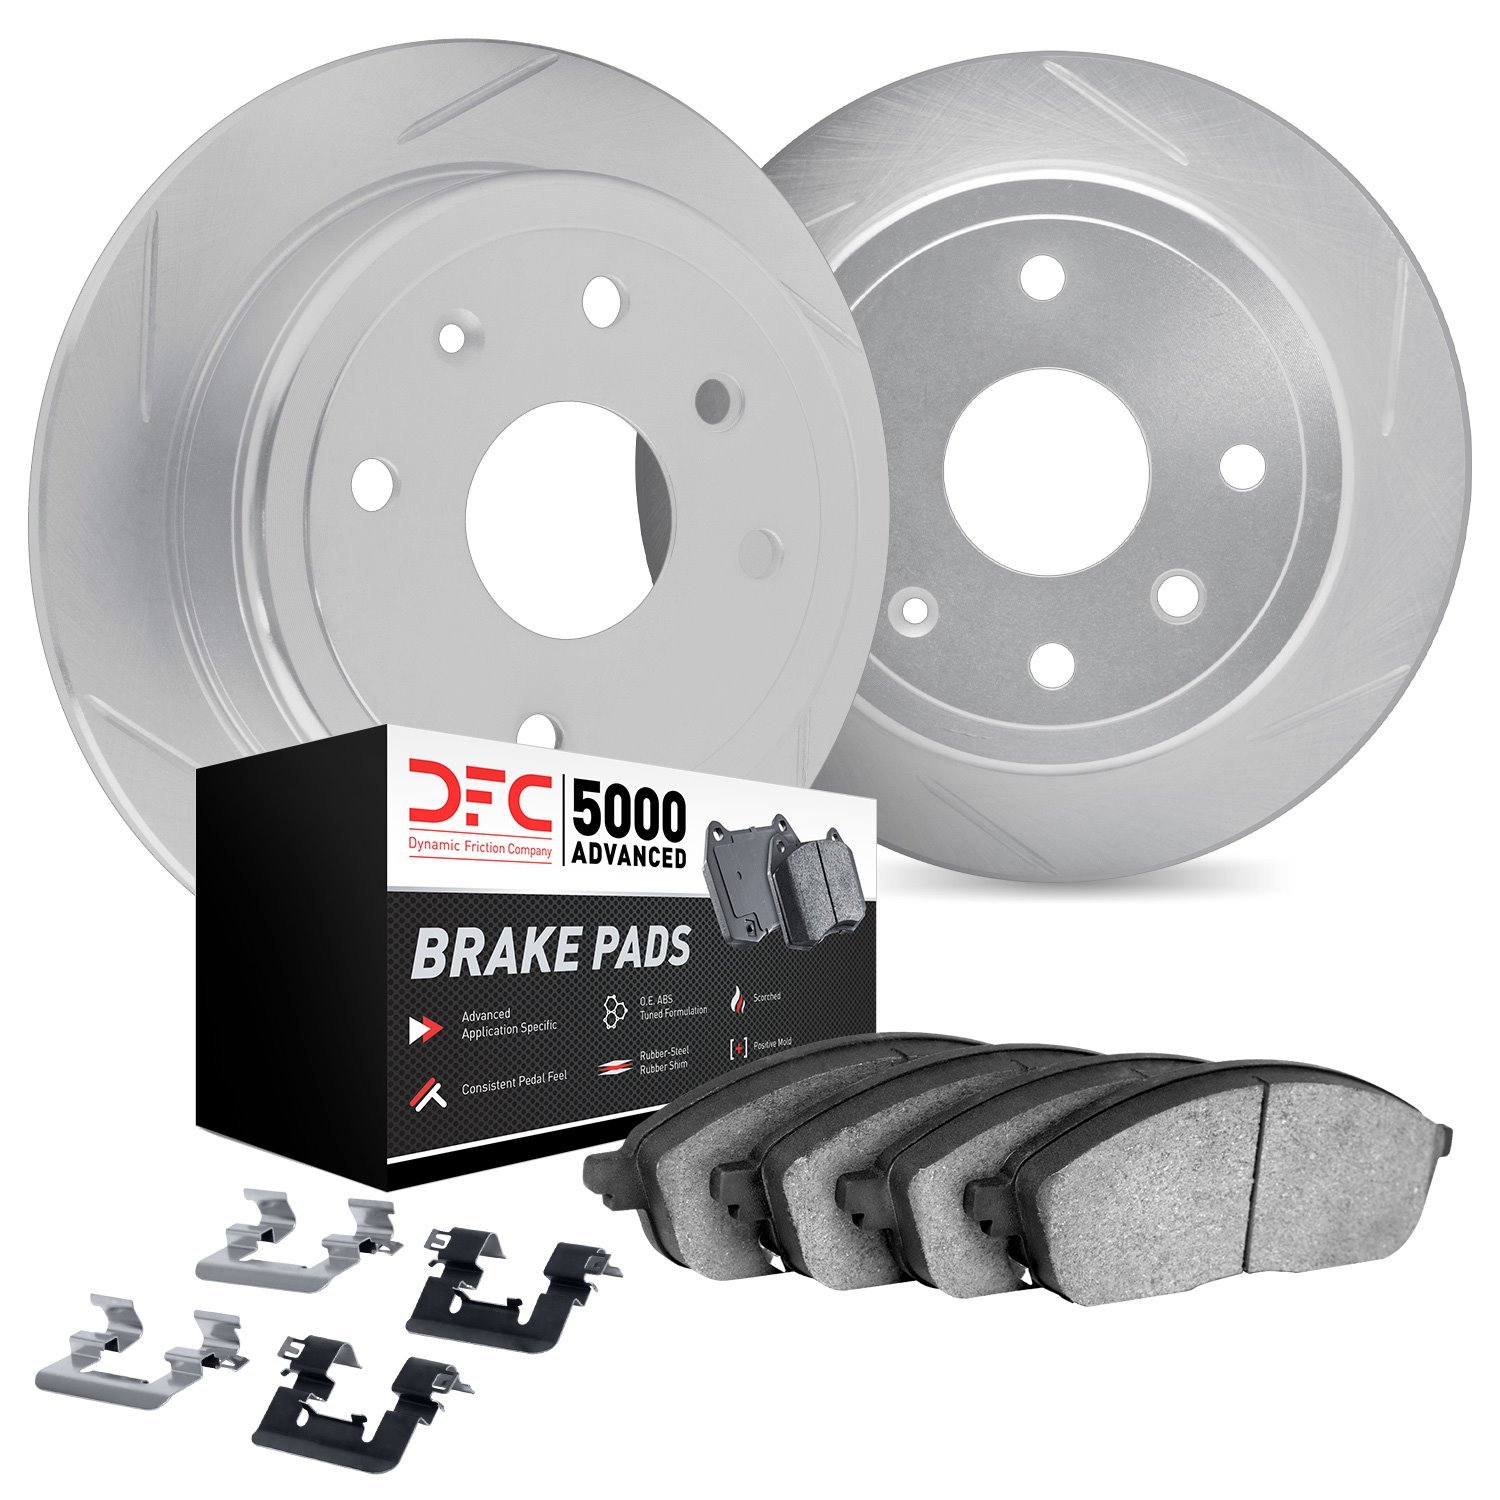 5512-67098 Slotted Brake Rotors w/5000 Advanced Brake Pads Kit & Hardware [Silver], Fits Select Multiple Makes/Models, Position: